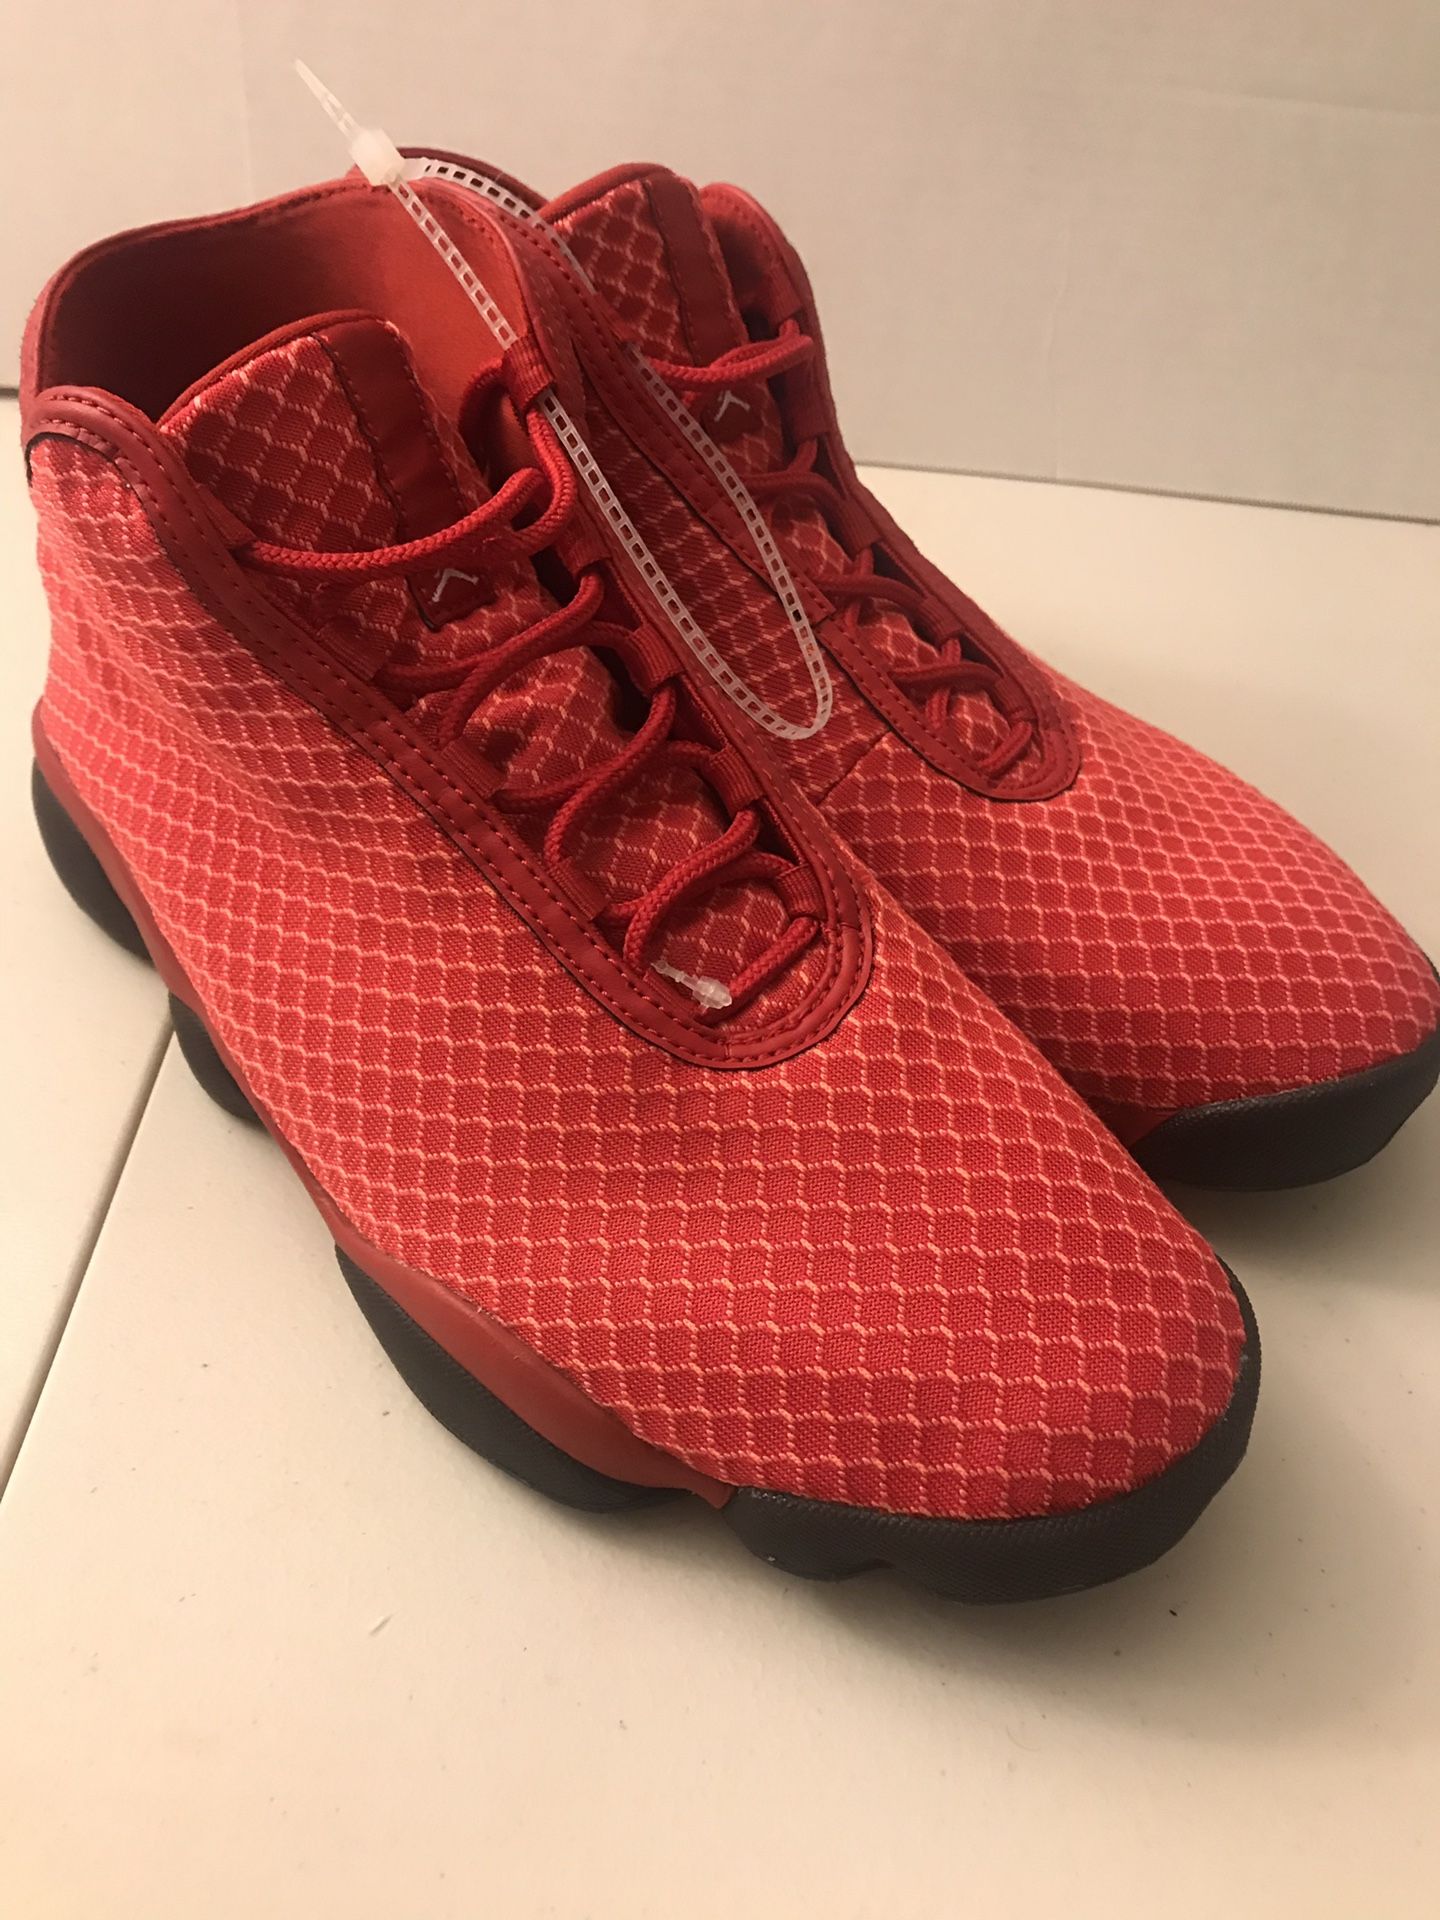 NEW Nike Air Jordan Horizon Size 11 Men's Ankle-High Basketball Shoe 823581-600